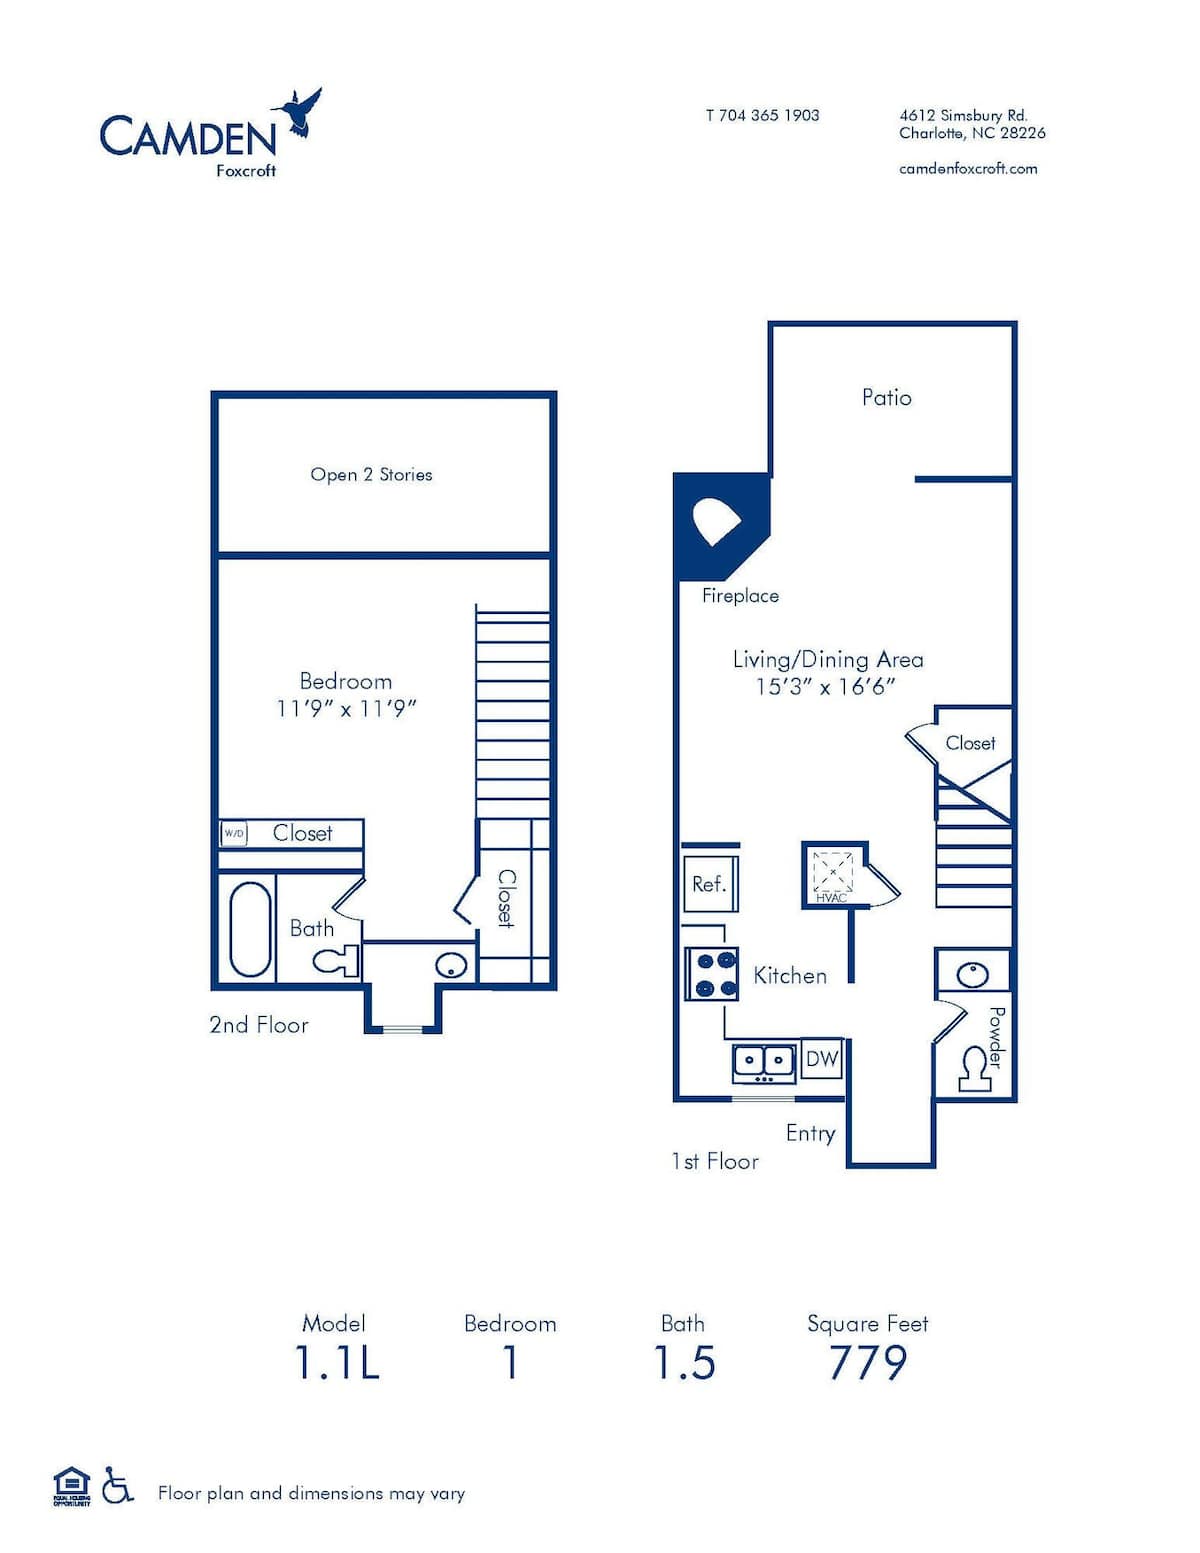 Floorplan diagram for 1.1 Loft, showing 1 bedroom